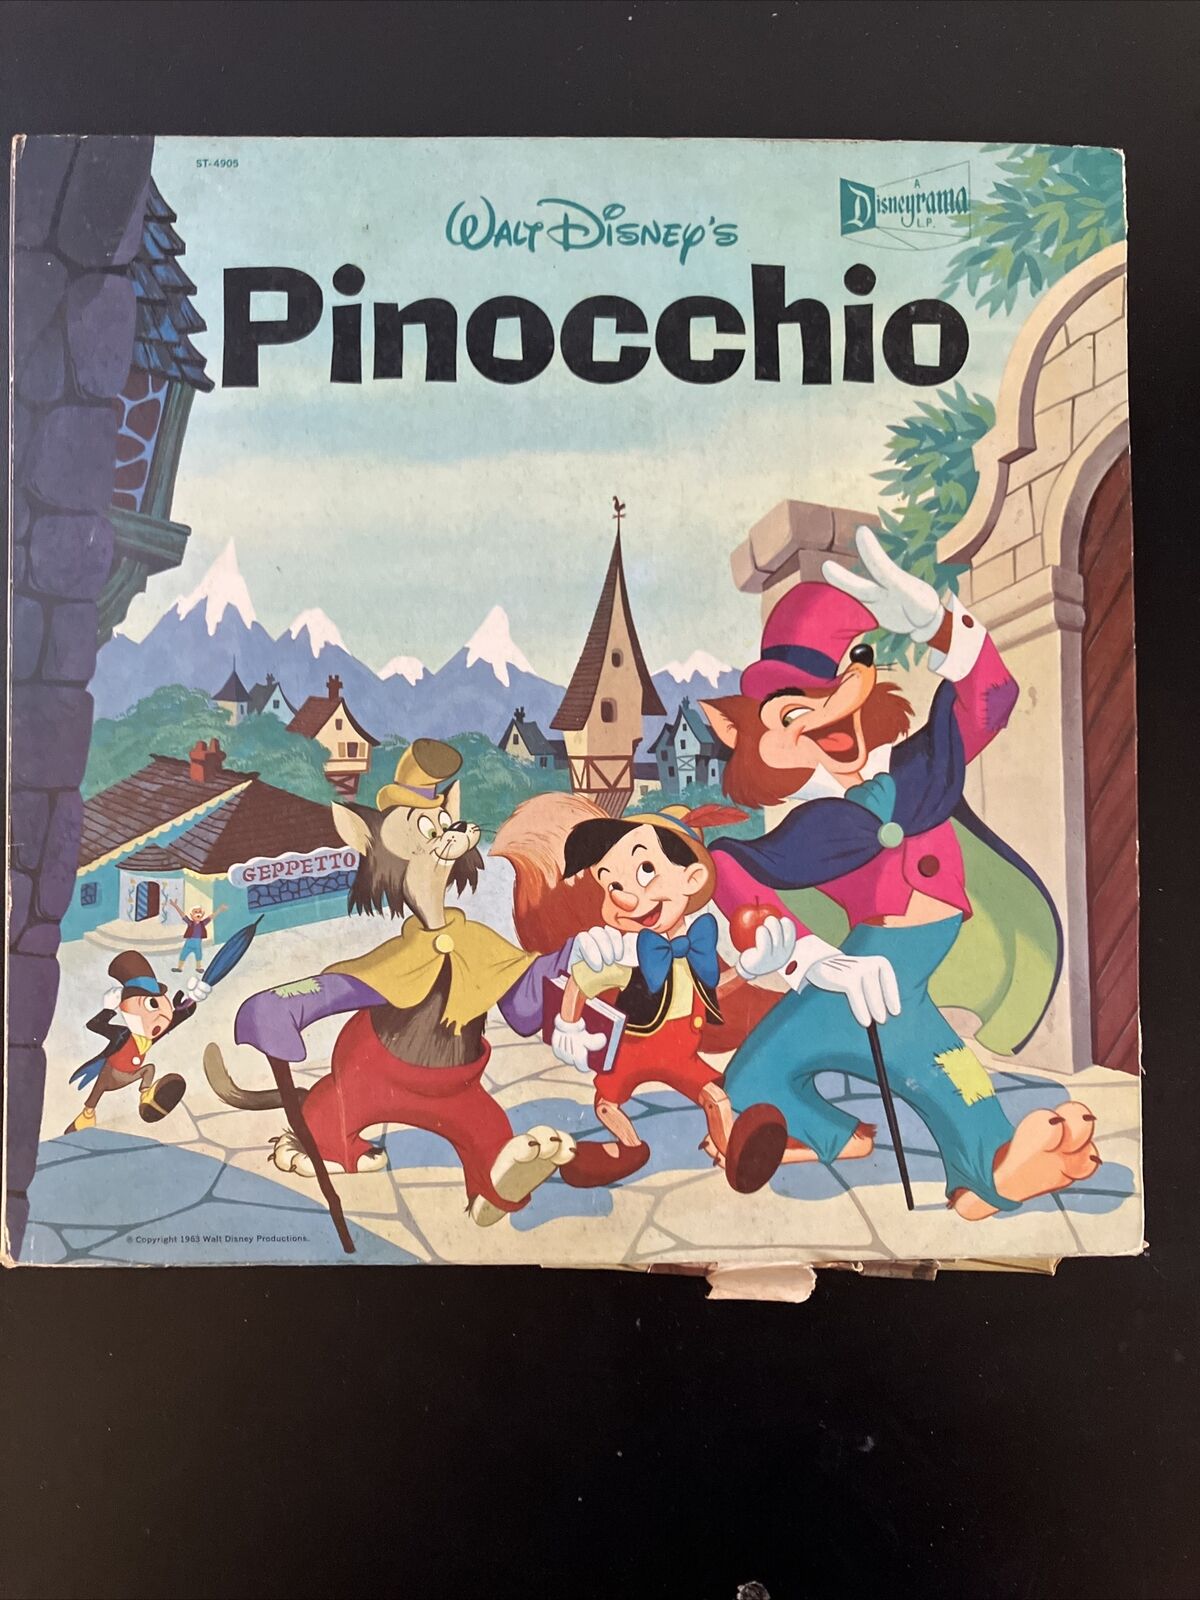 Walt Disney Studio Disneyrama Sleeve Pinocchio Vinyl LP Wish upon a Star